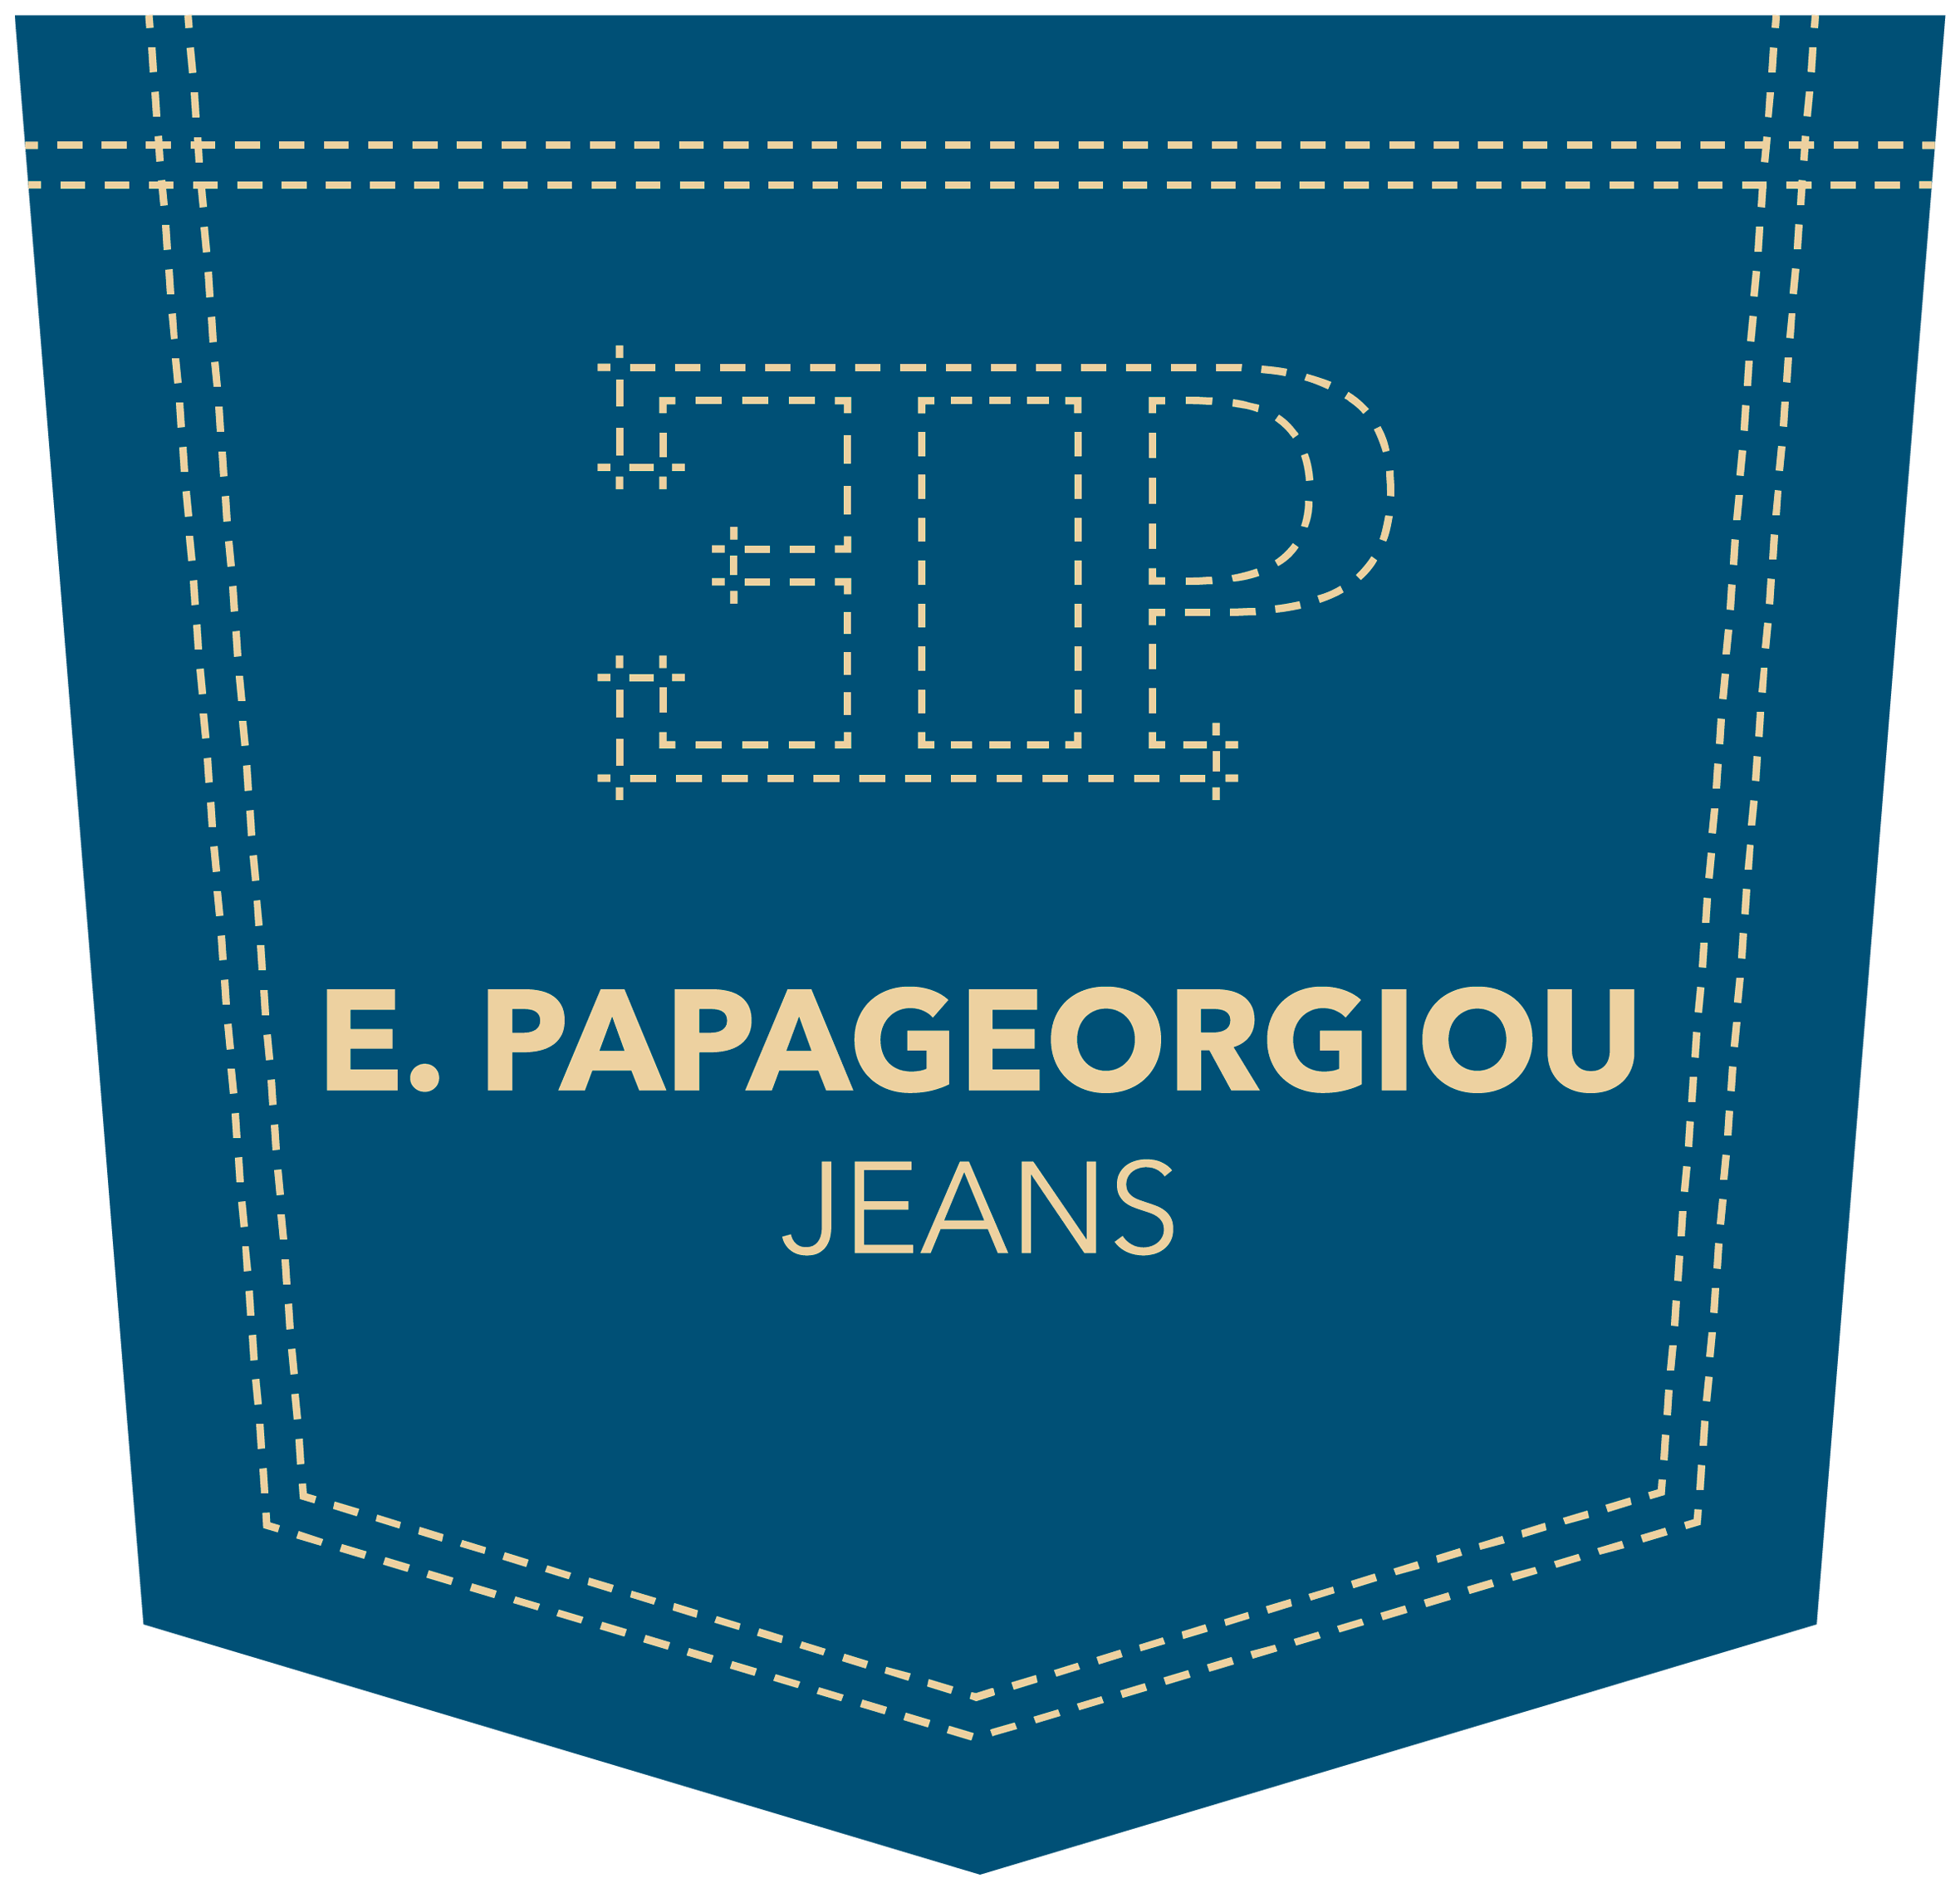 E. PAPAGEORGIOU JEANS